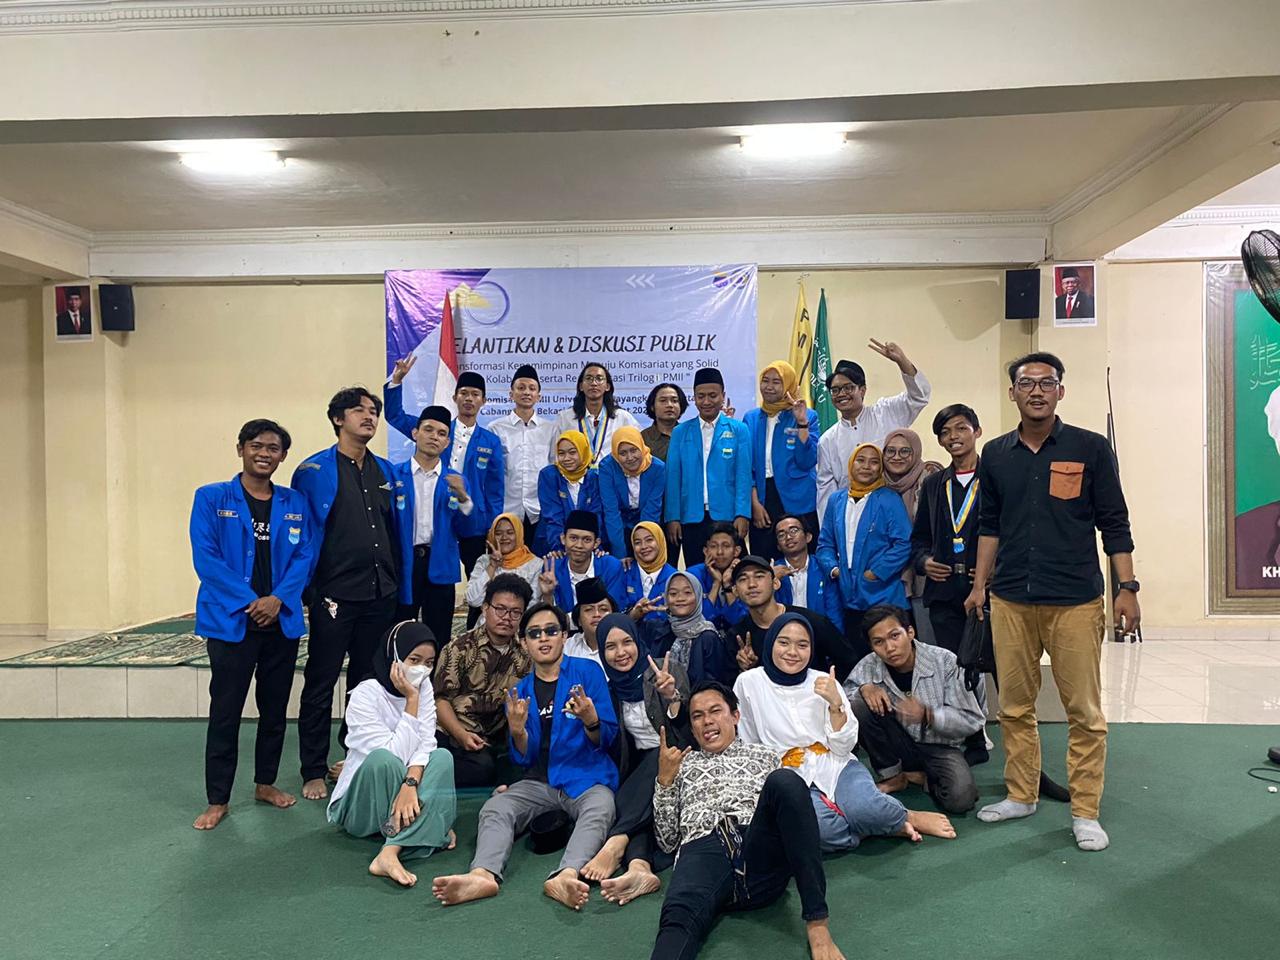 Mahasiswa Islam Indonesia Universitas Bhayangkara Jakarta Raya Adakan Pelantikan Pelantikan dan Diskusi Publik dengan tema "Tranformasi Kepemimpinan menuju Komisariat yang Solid dan Kolaboratif serta Reaktualisasi Trilogi PMII"